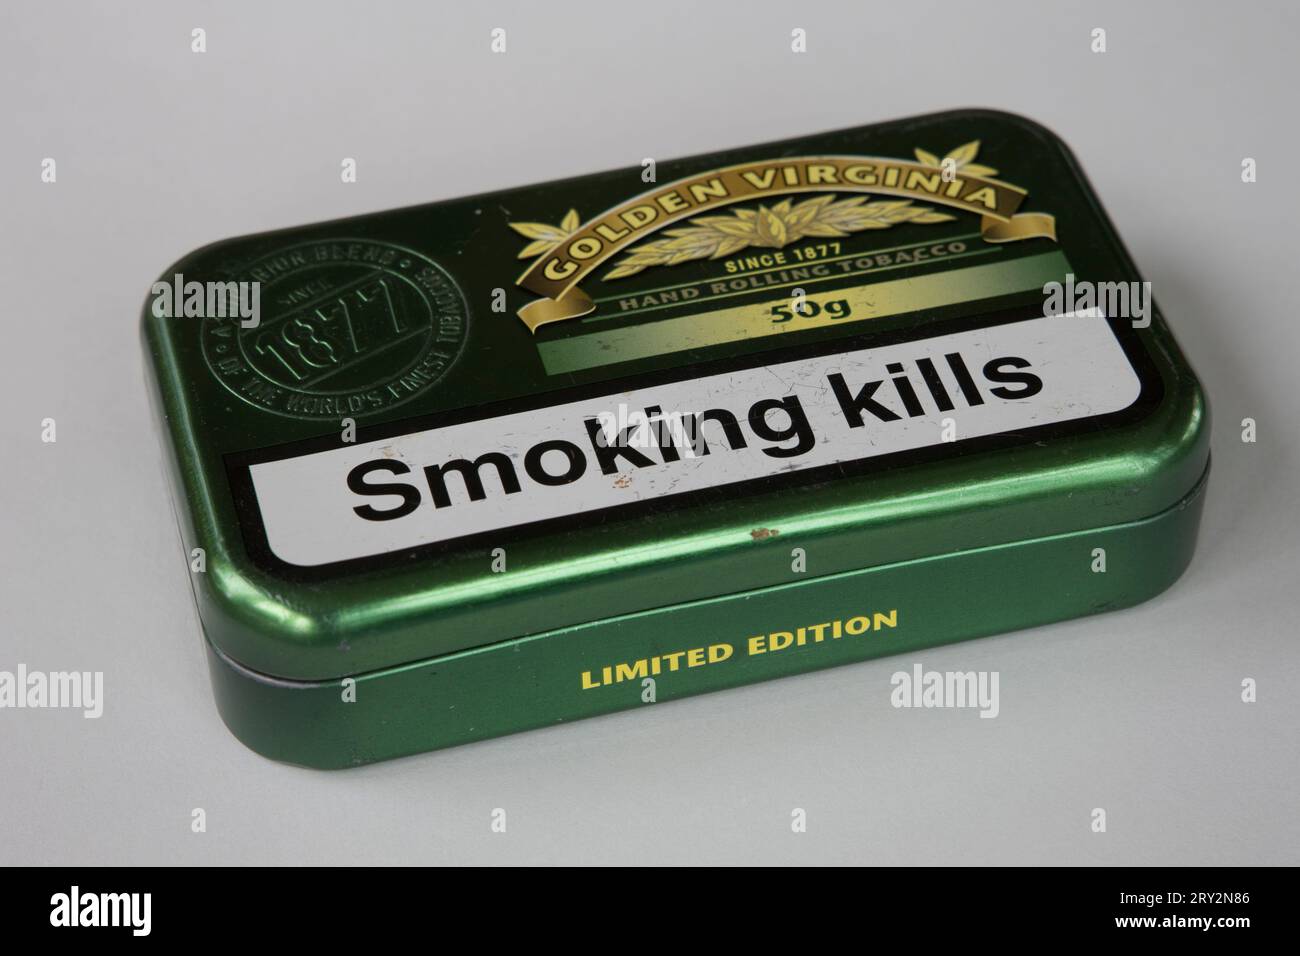 Tabaco para liar fotografías e imágenes de alta resolución - Alamy